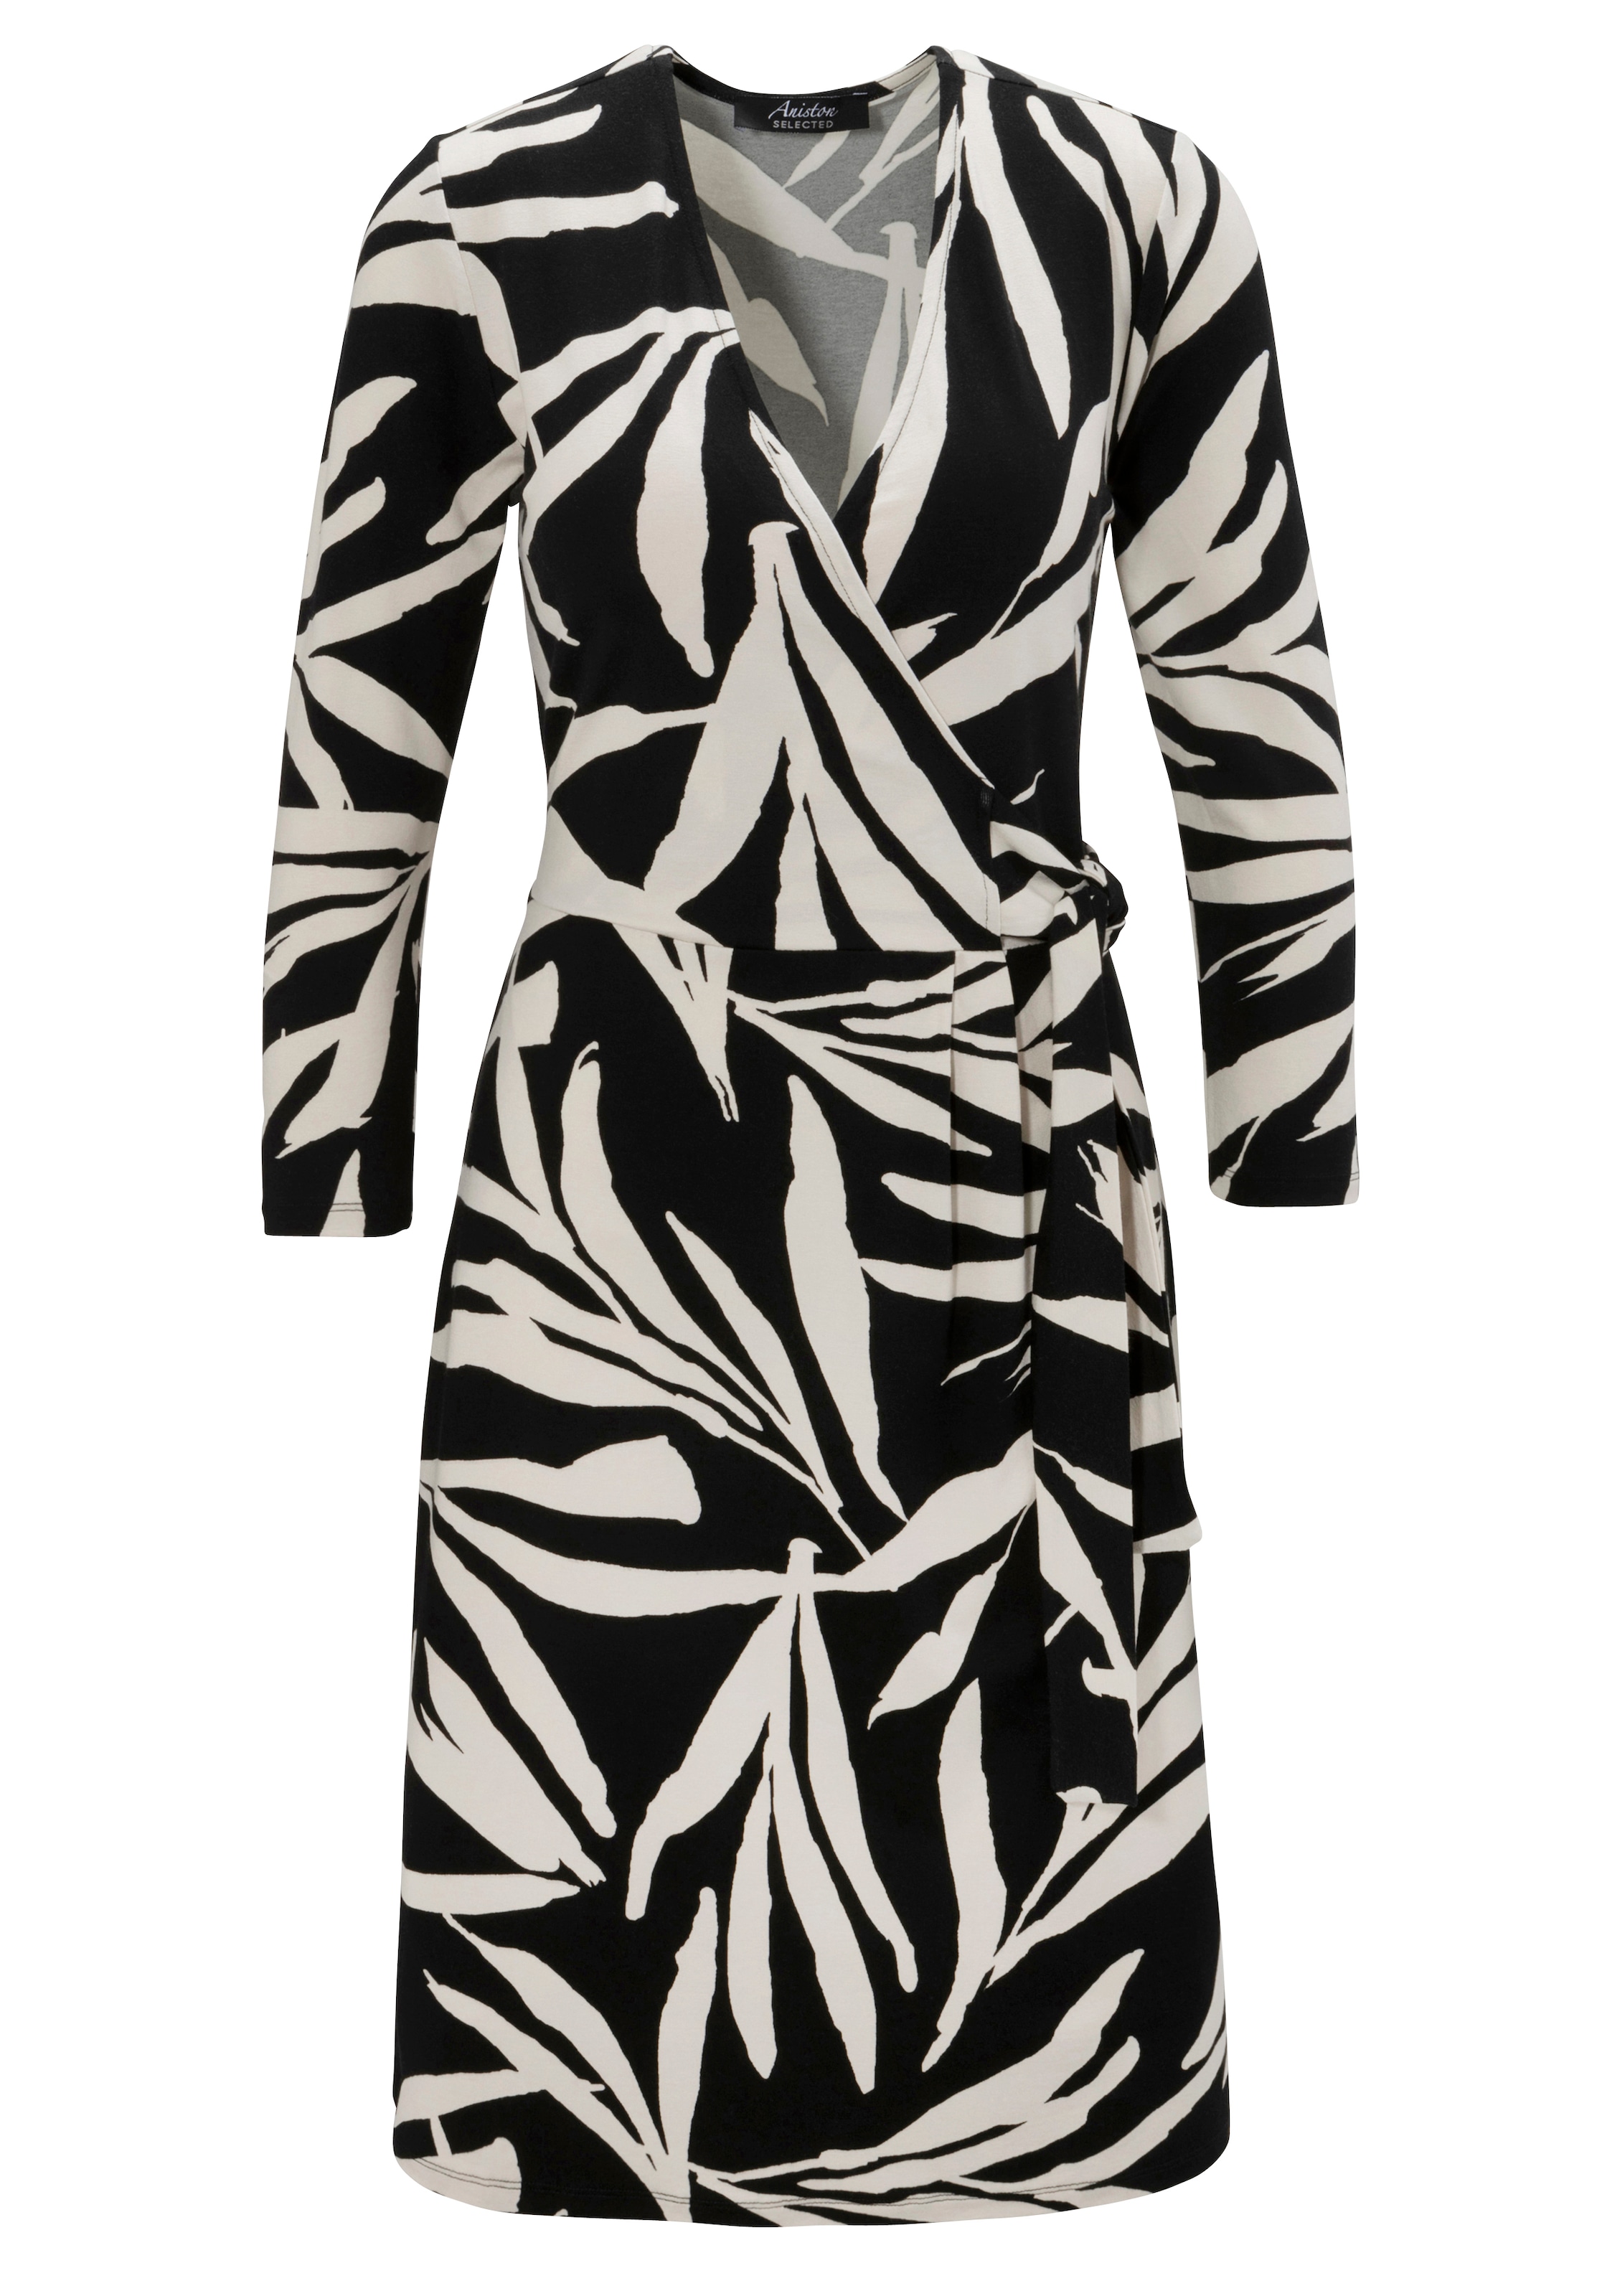 Aniston SELECTED Jerseykleid, mit Blätterdruck und femininer Wickeloptik